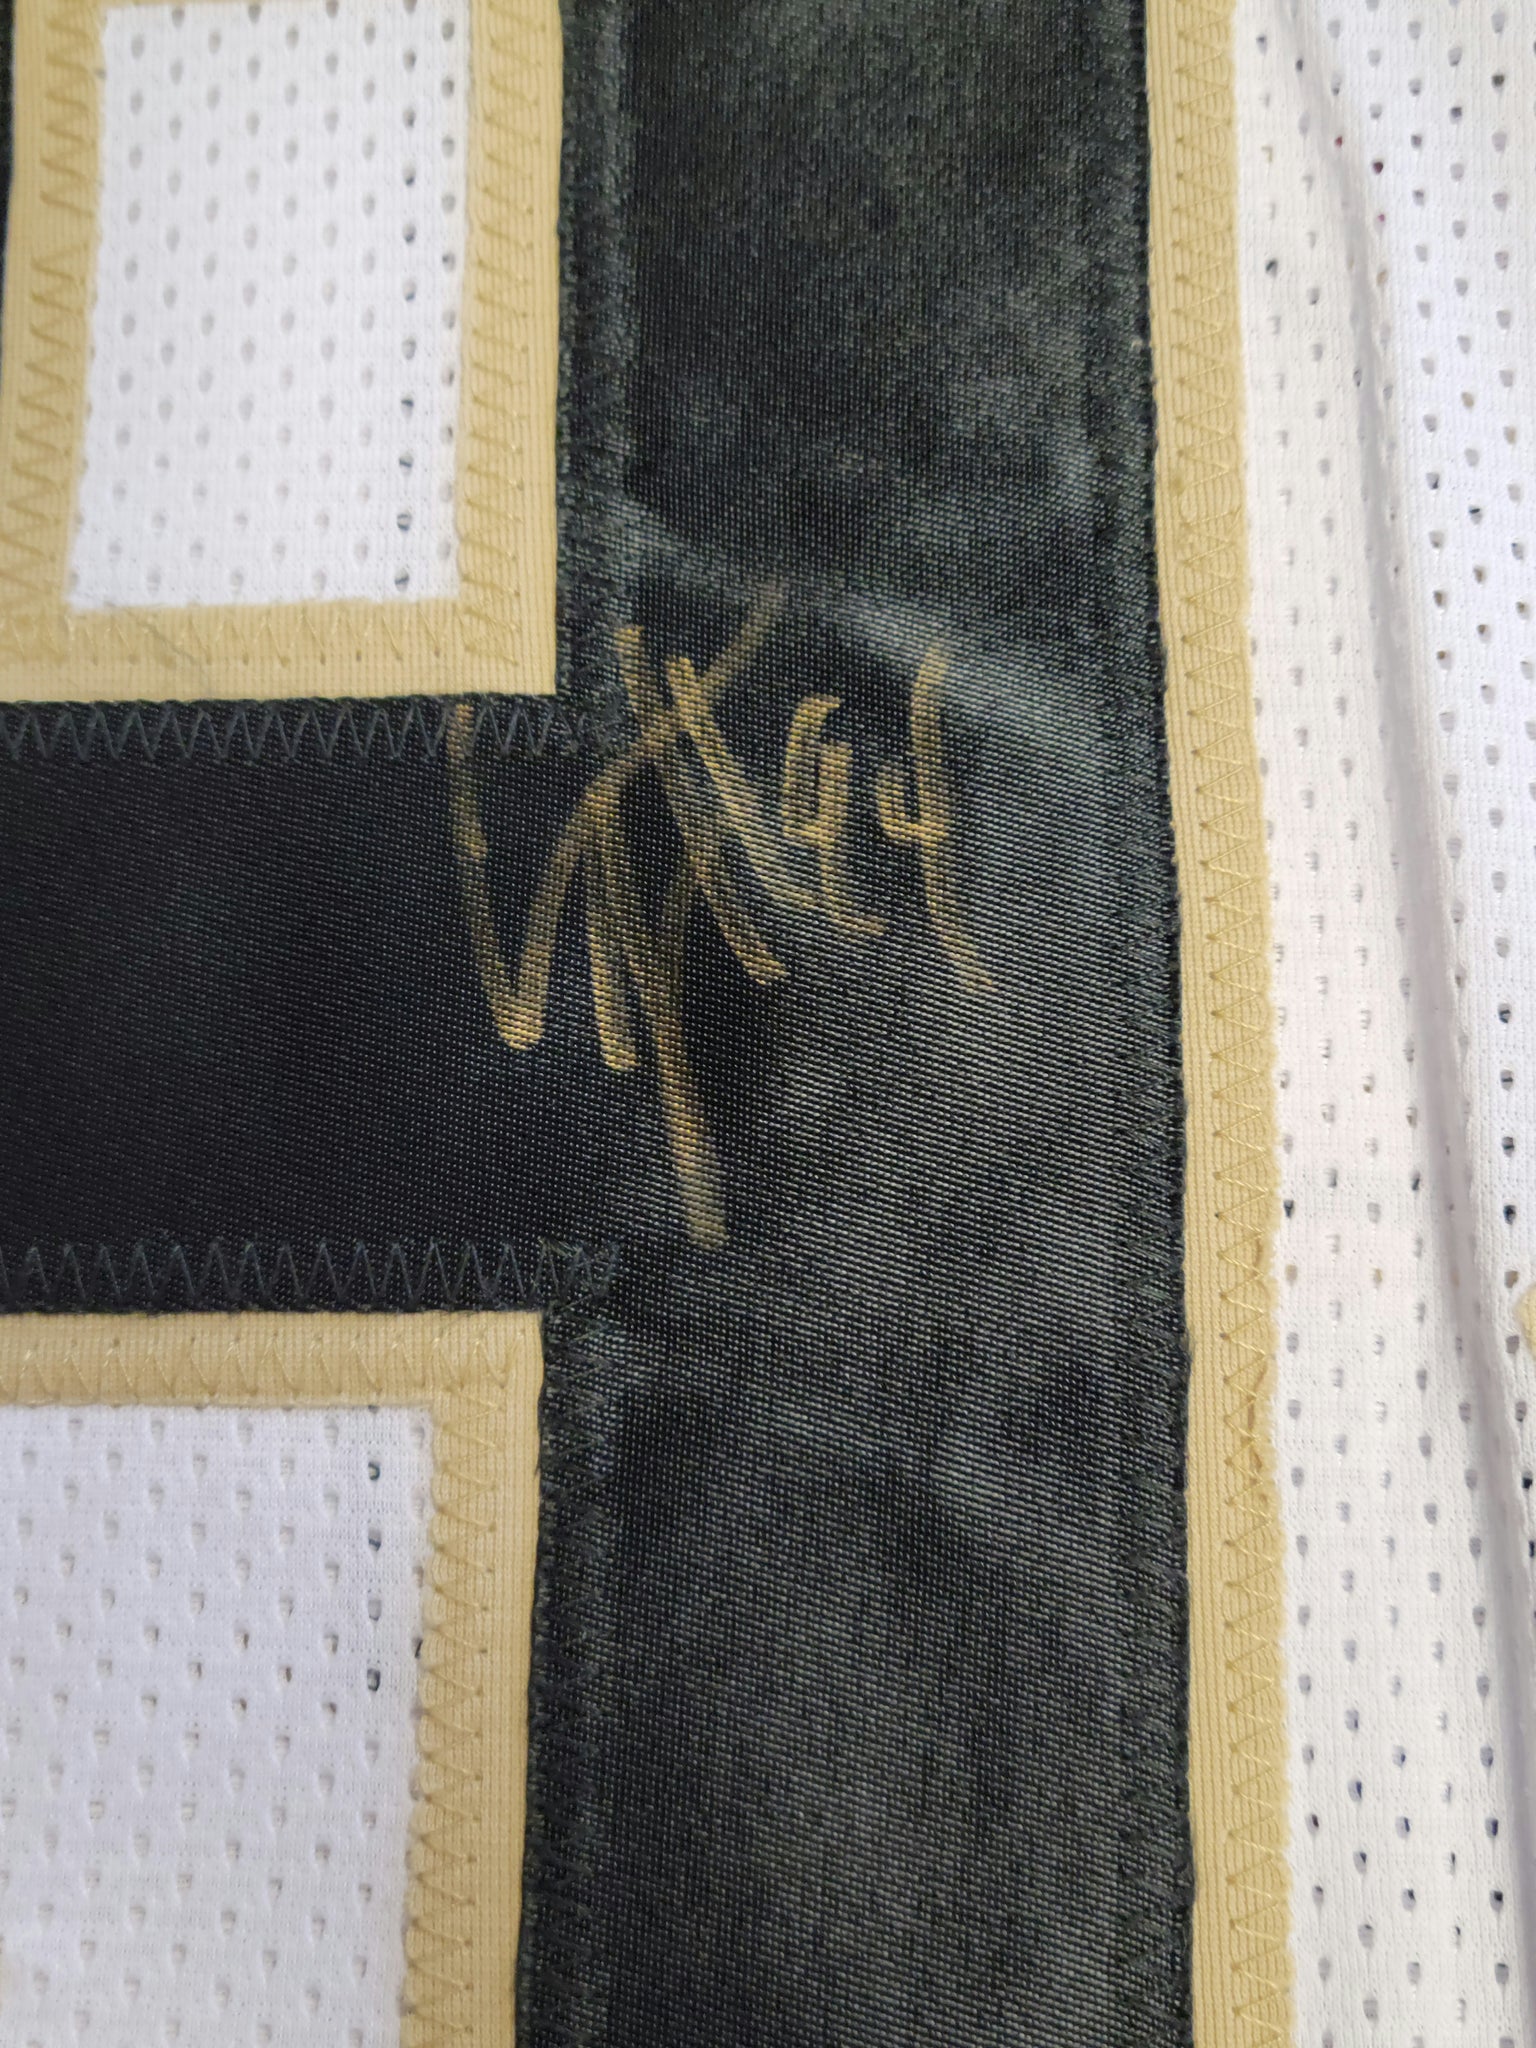 Cam Jordan Authentic Signed Pro Style Jersey Autographed JSA